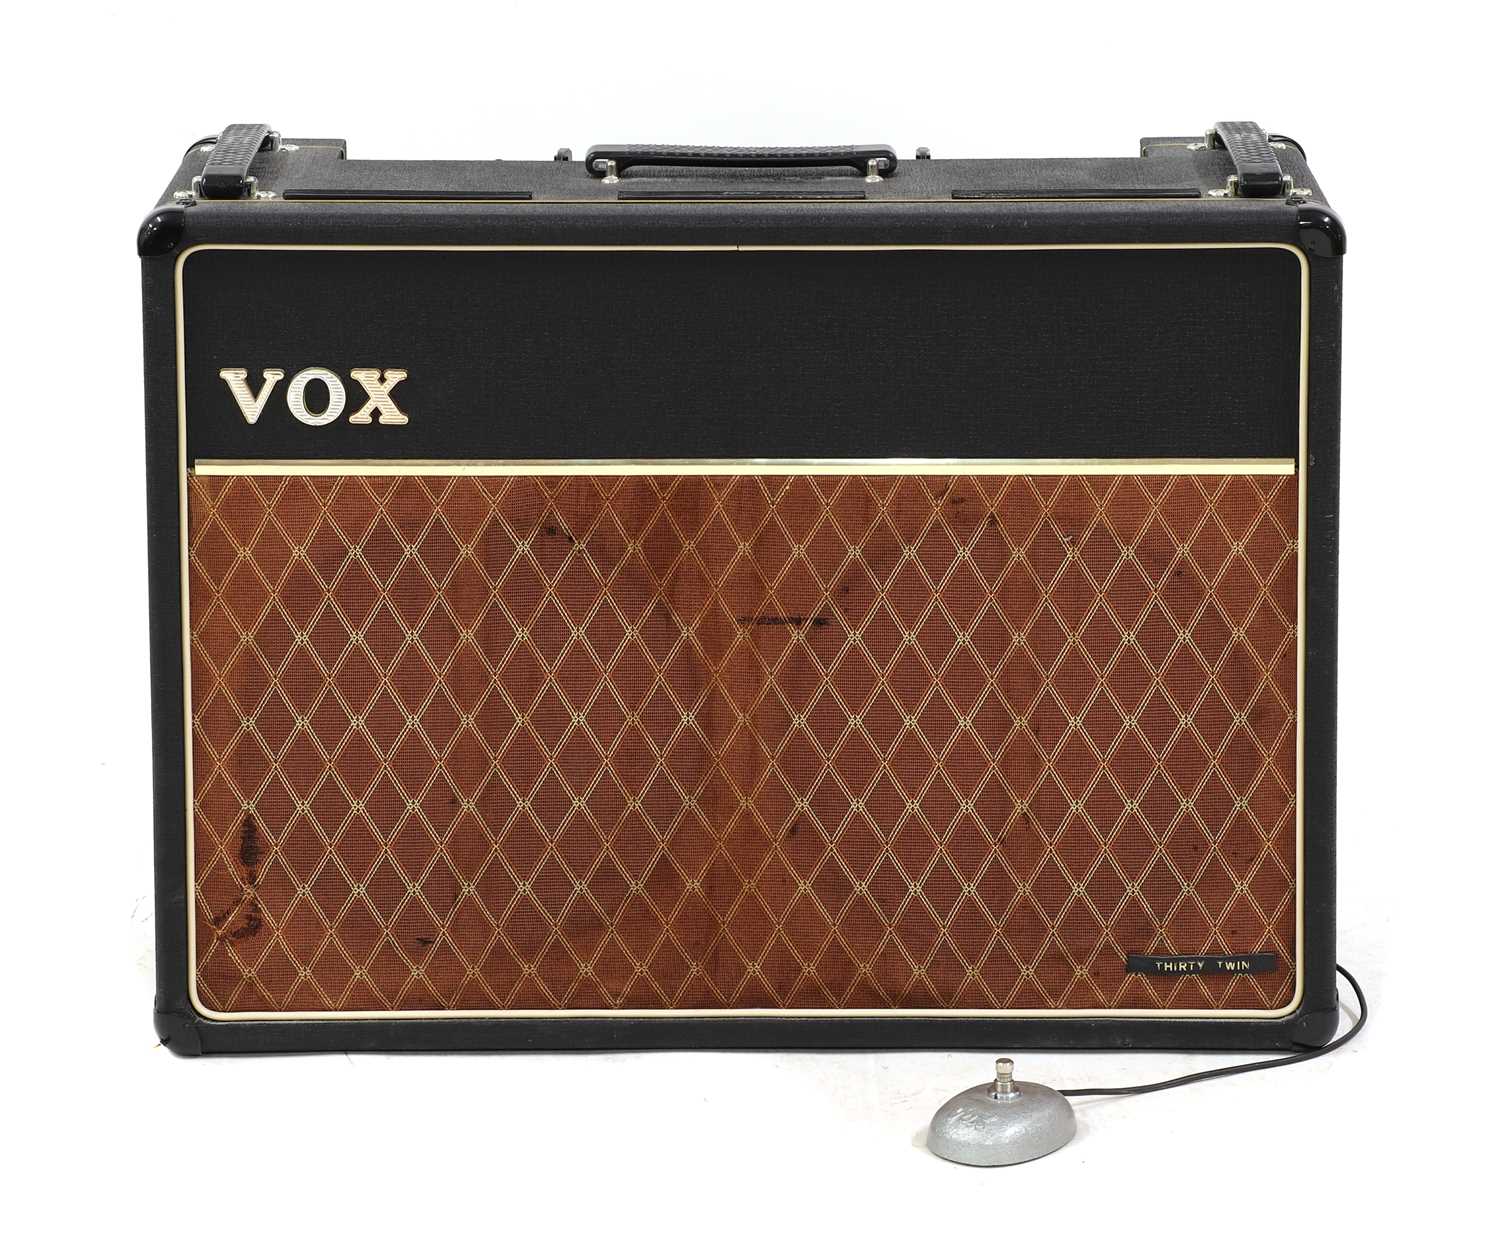 Lot 391 - A 1964 Vox AC30/6 Thirty Twin guitar amplifier